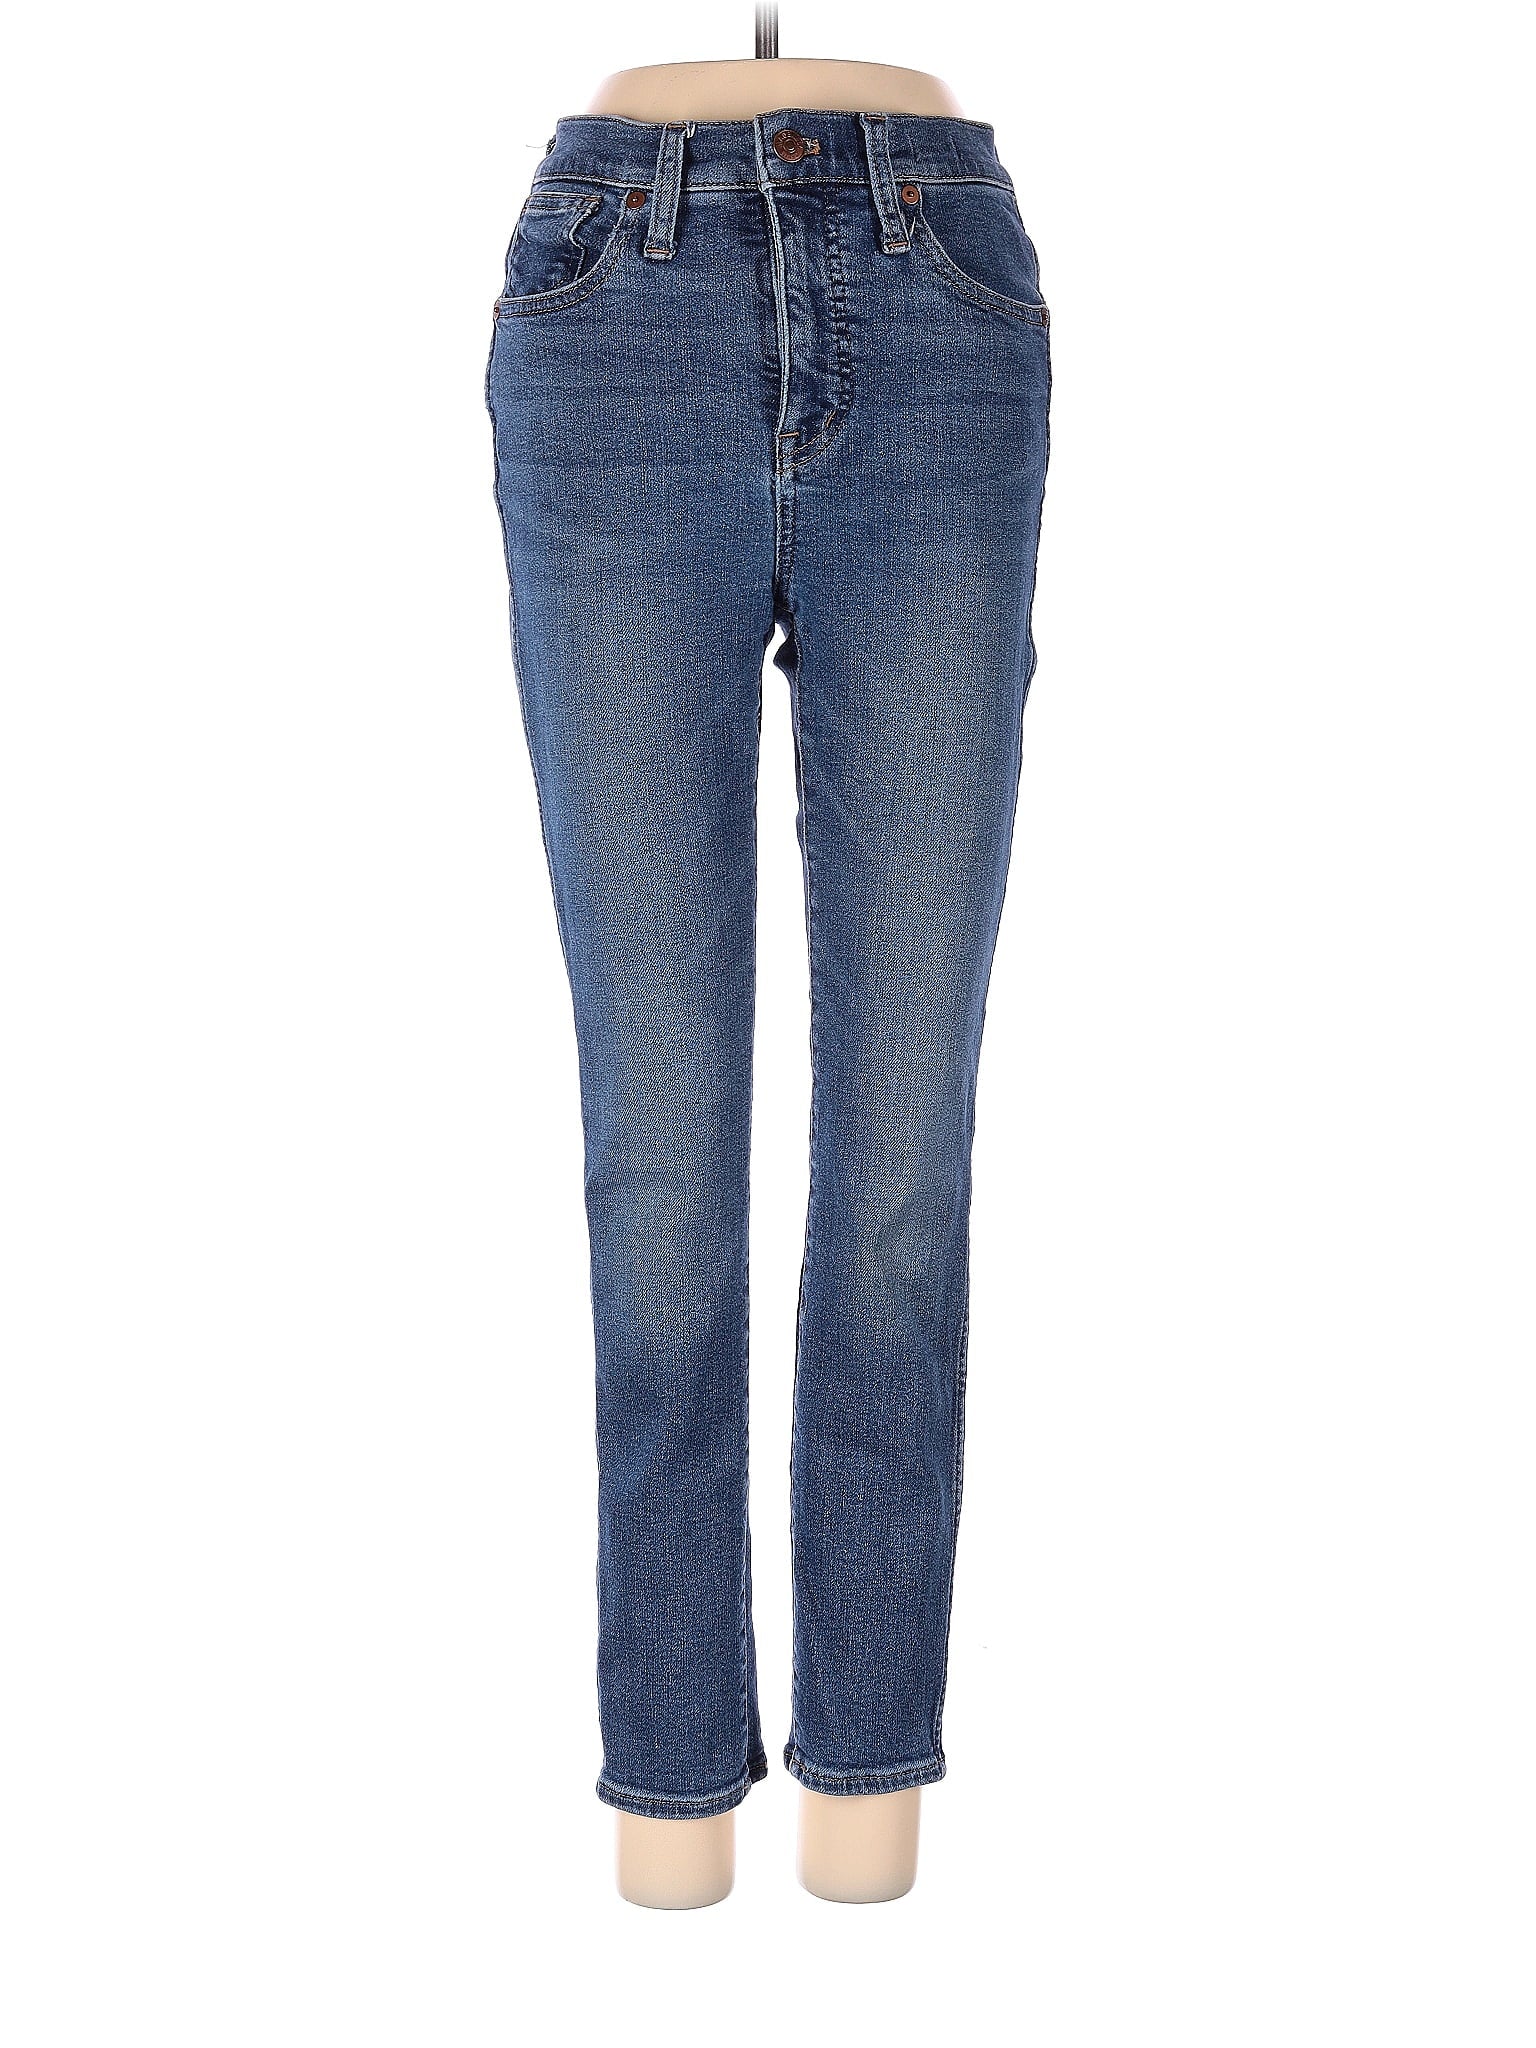 Mid-Rise Boyjeans Jeans in Dark Wash waist size - 24 P